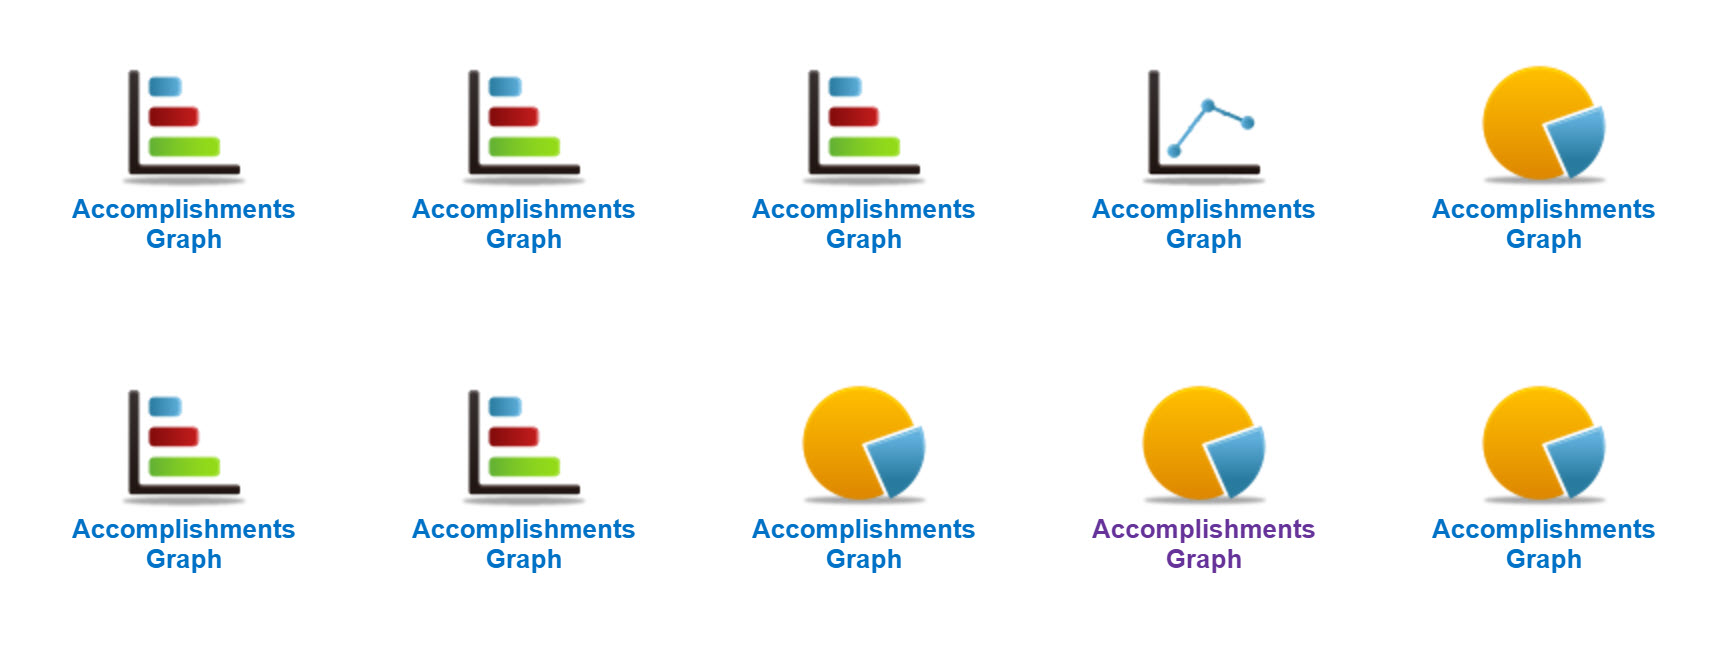 accomplishment_graphs.jpg